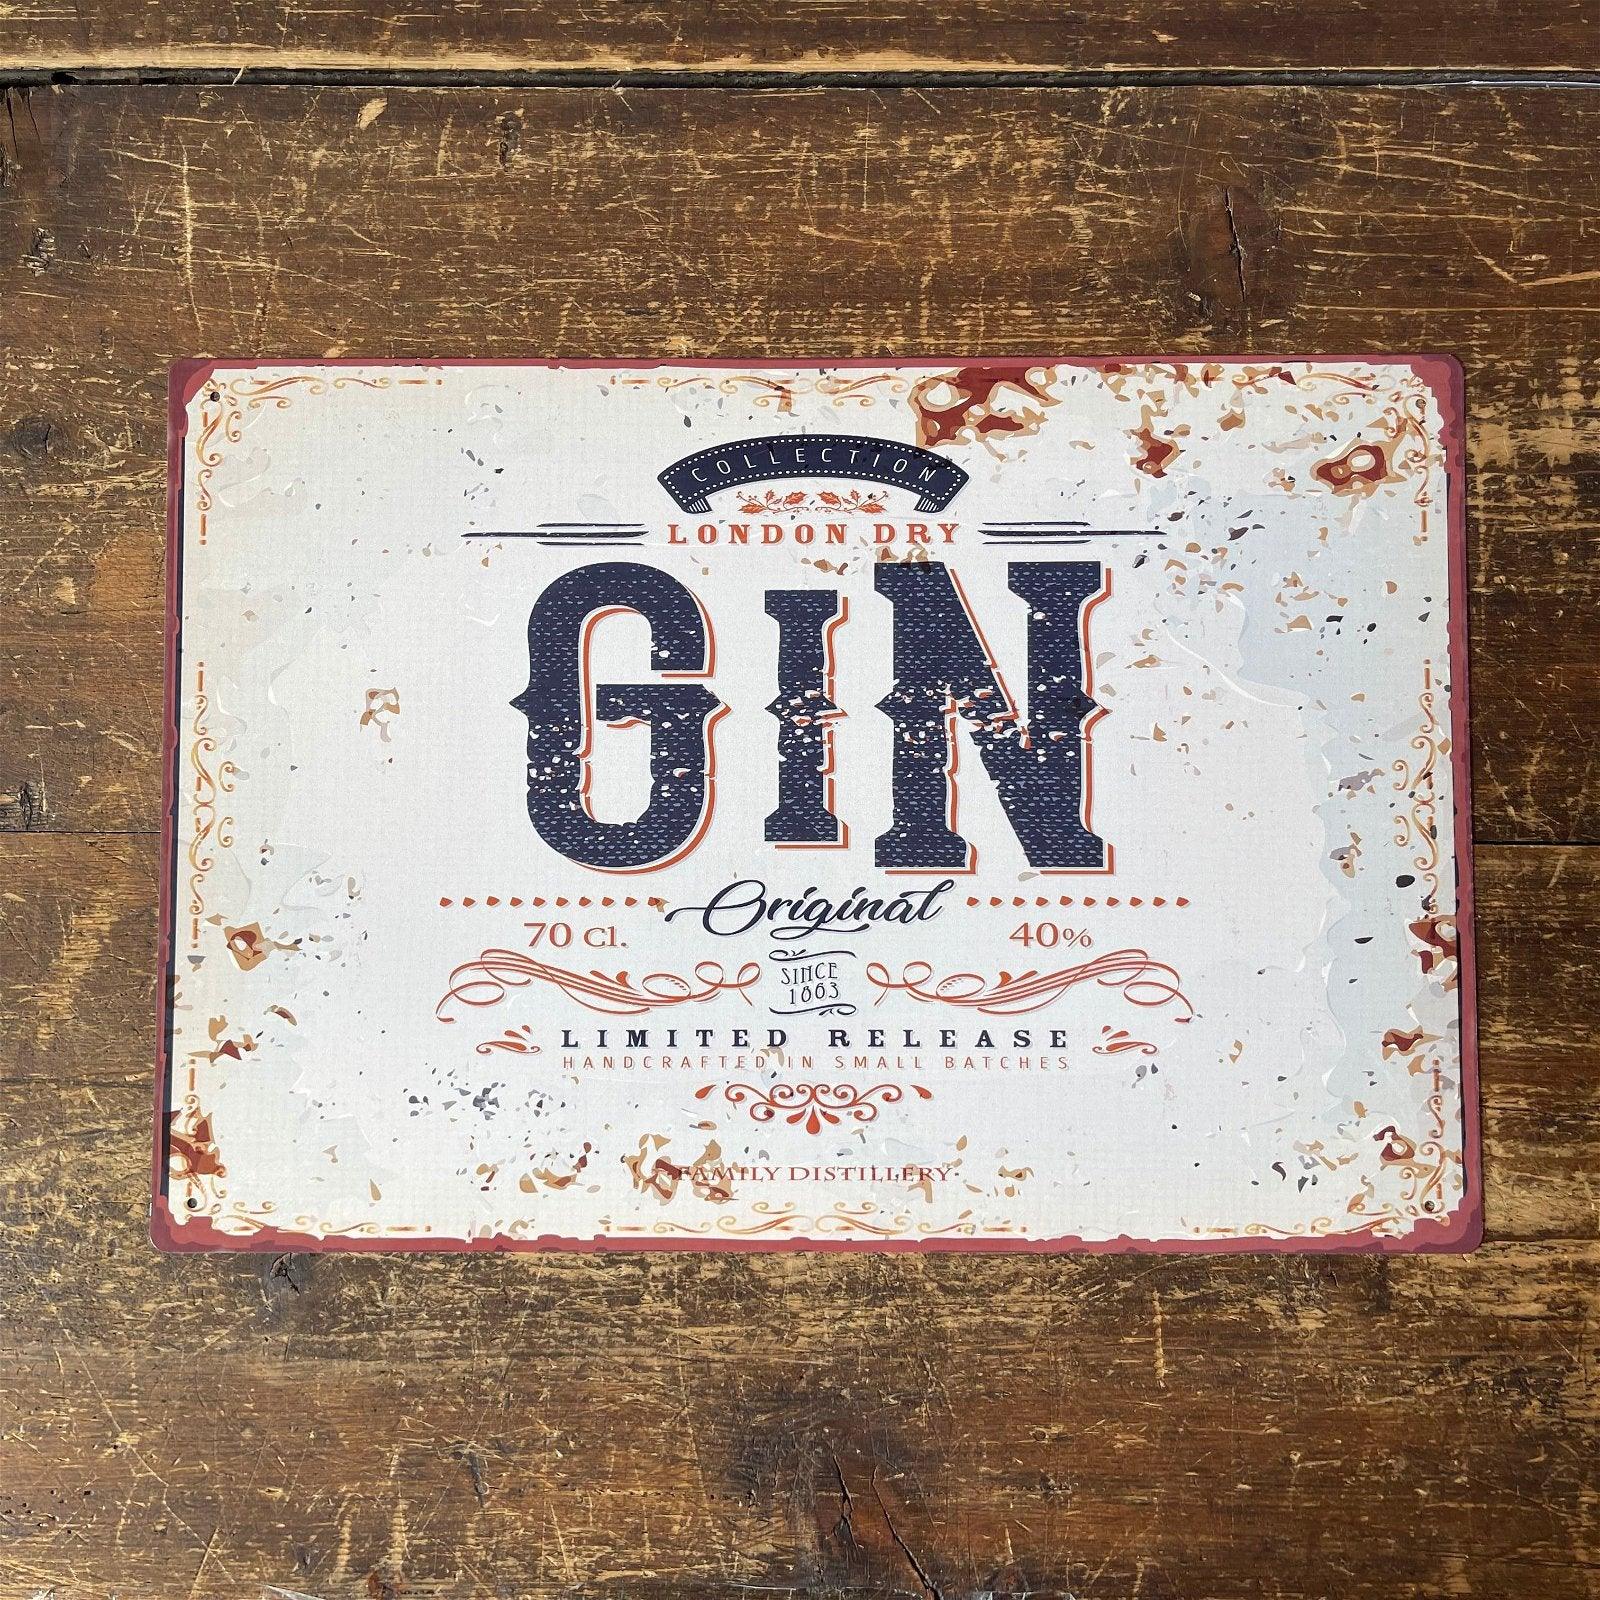 View Vintage Metal Sign Retro Advertising London Dry Gin information